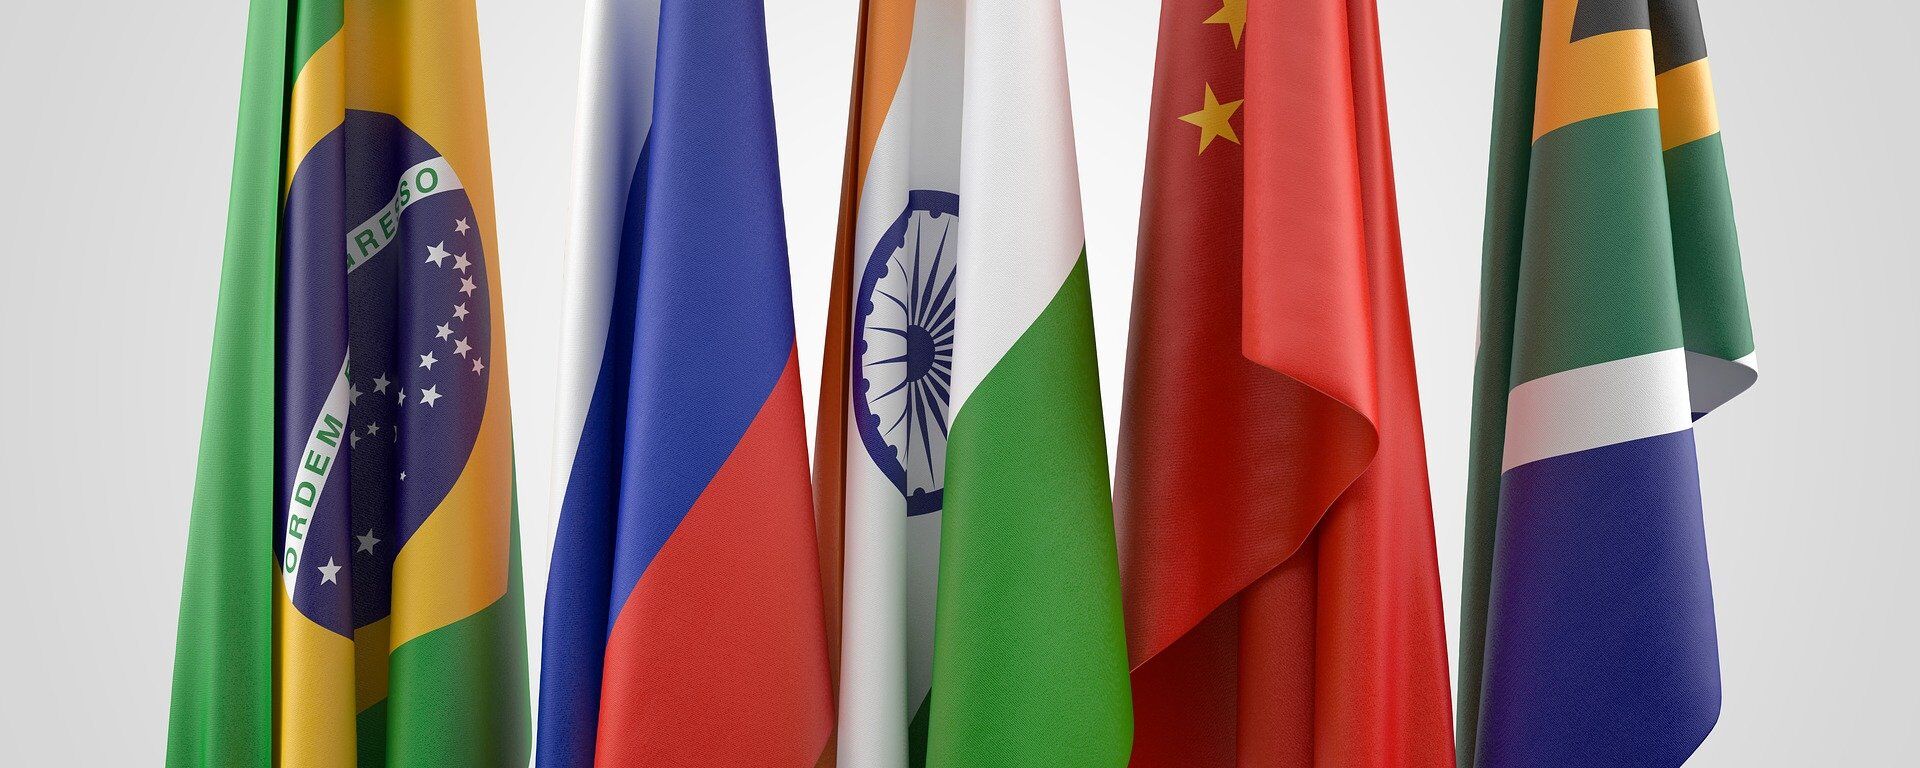 Banderas de los países BRICS: Brasil, Rusia, India, China y Sudáfrica - Sputnik Mundo, 1920, 07.09.2021